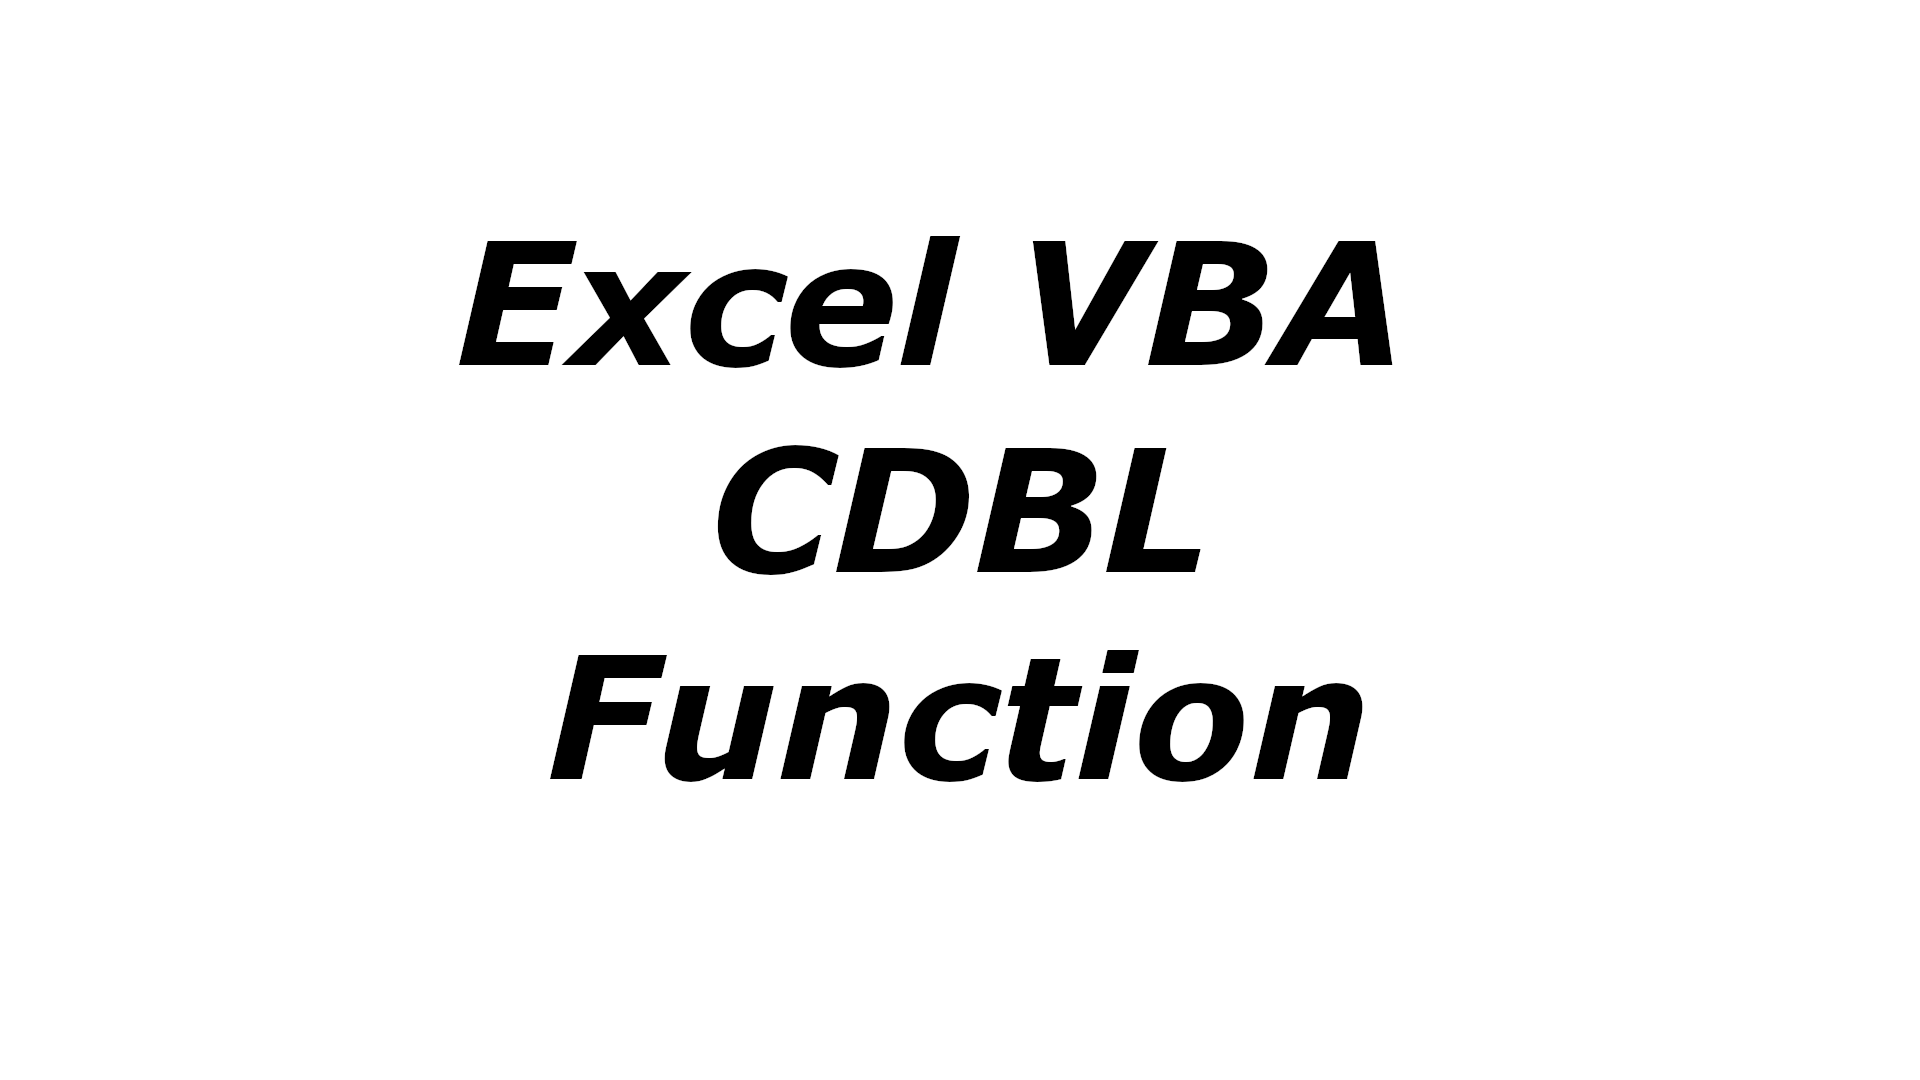 Excel VBA CDBL function